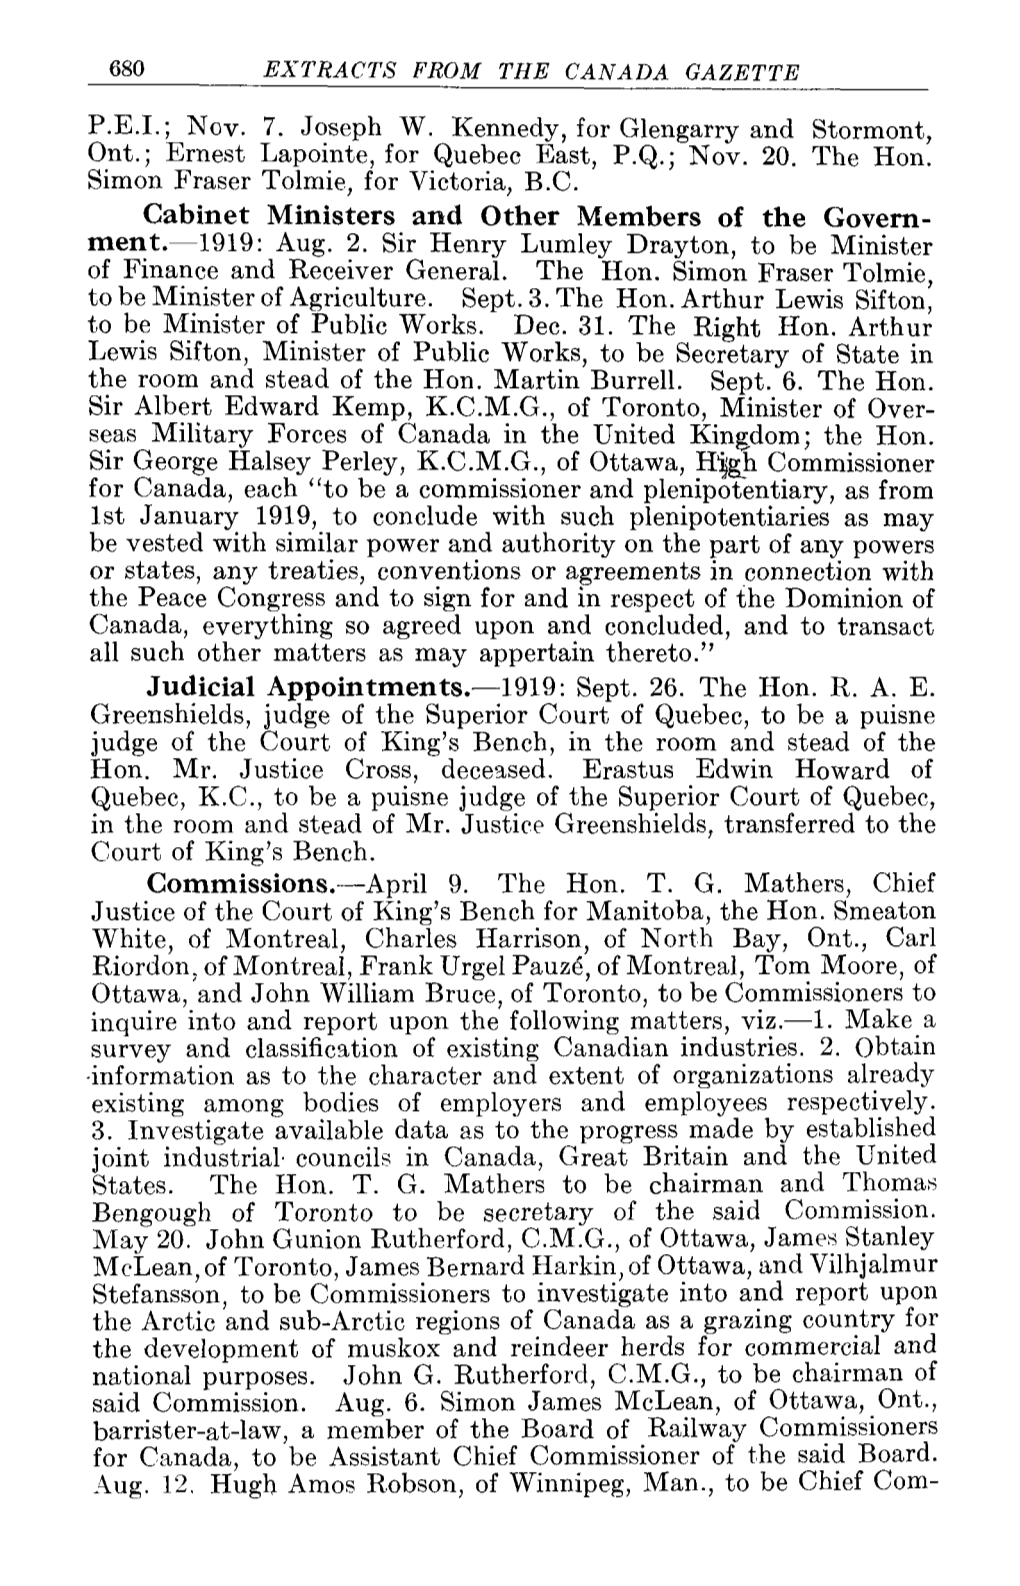 P.E.I.; Nov. 7. Joseph W. Kennedy, for Glengarry and Stormont, Ont.; Ernest Lapointe, for Quebec East, P.Q.; Nov. 20. the Hon. Simon Fraser Tolmie, for Victoria, B.C